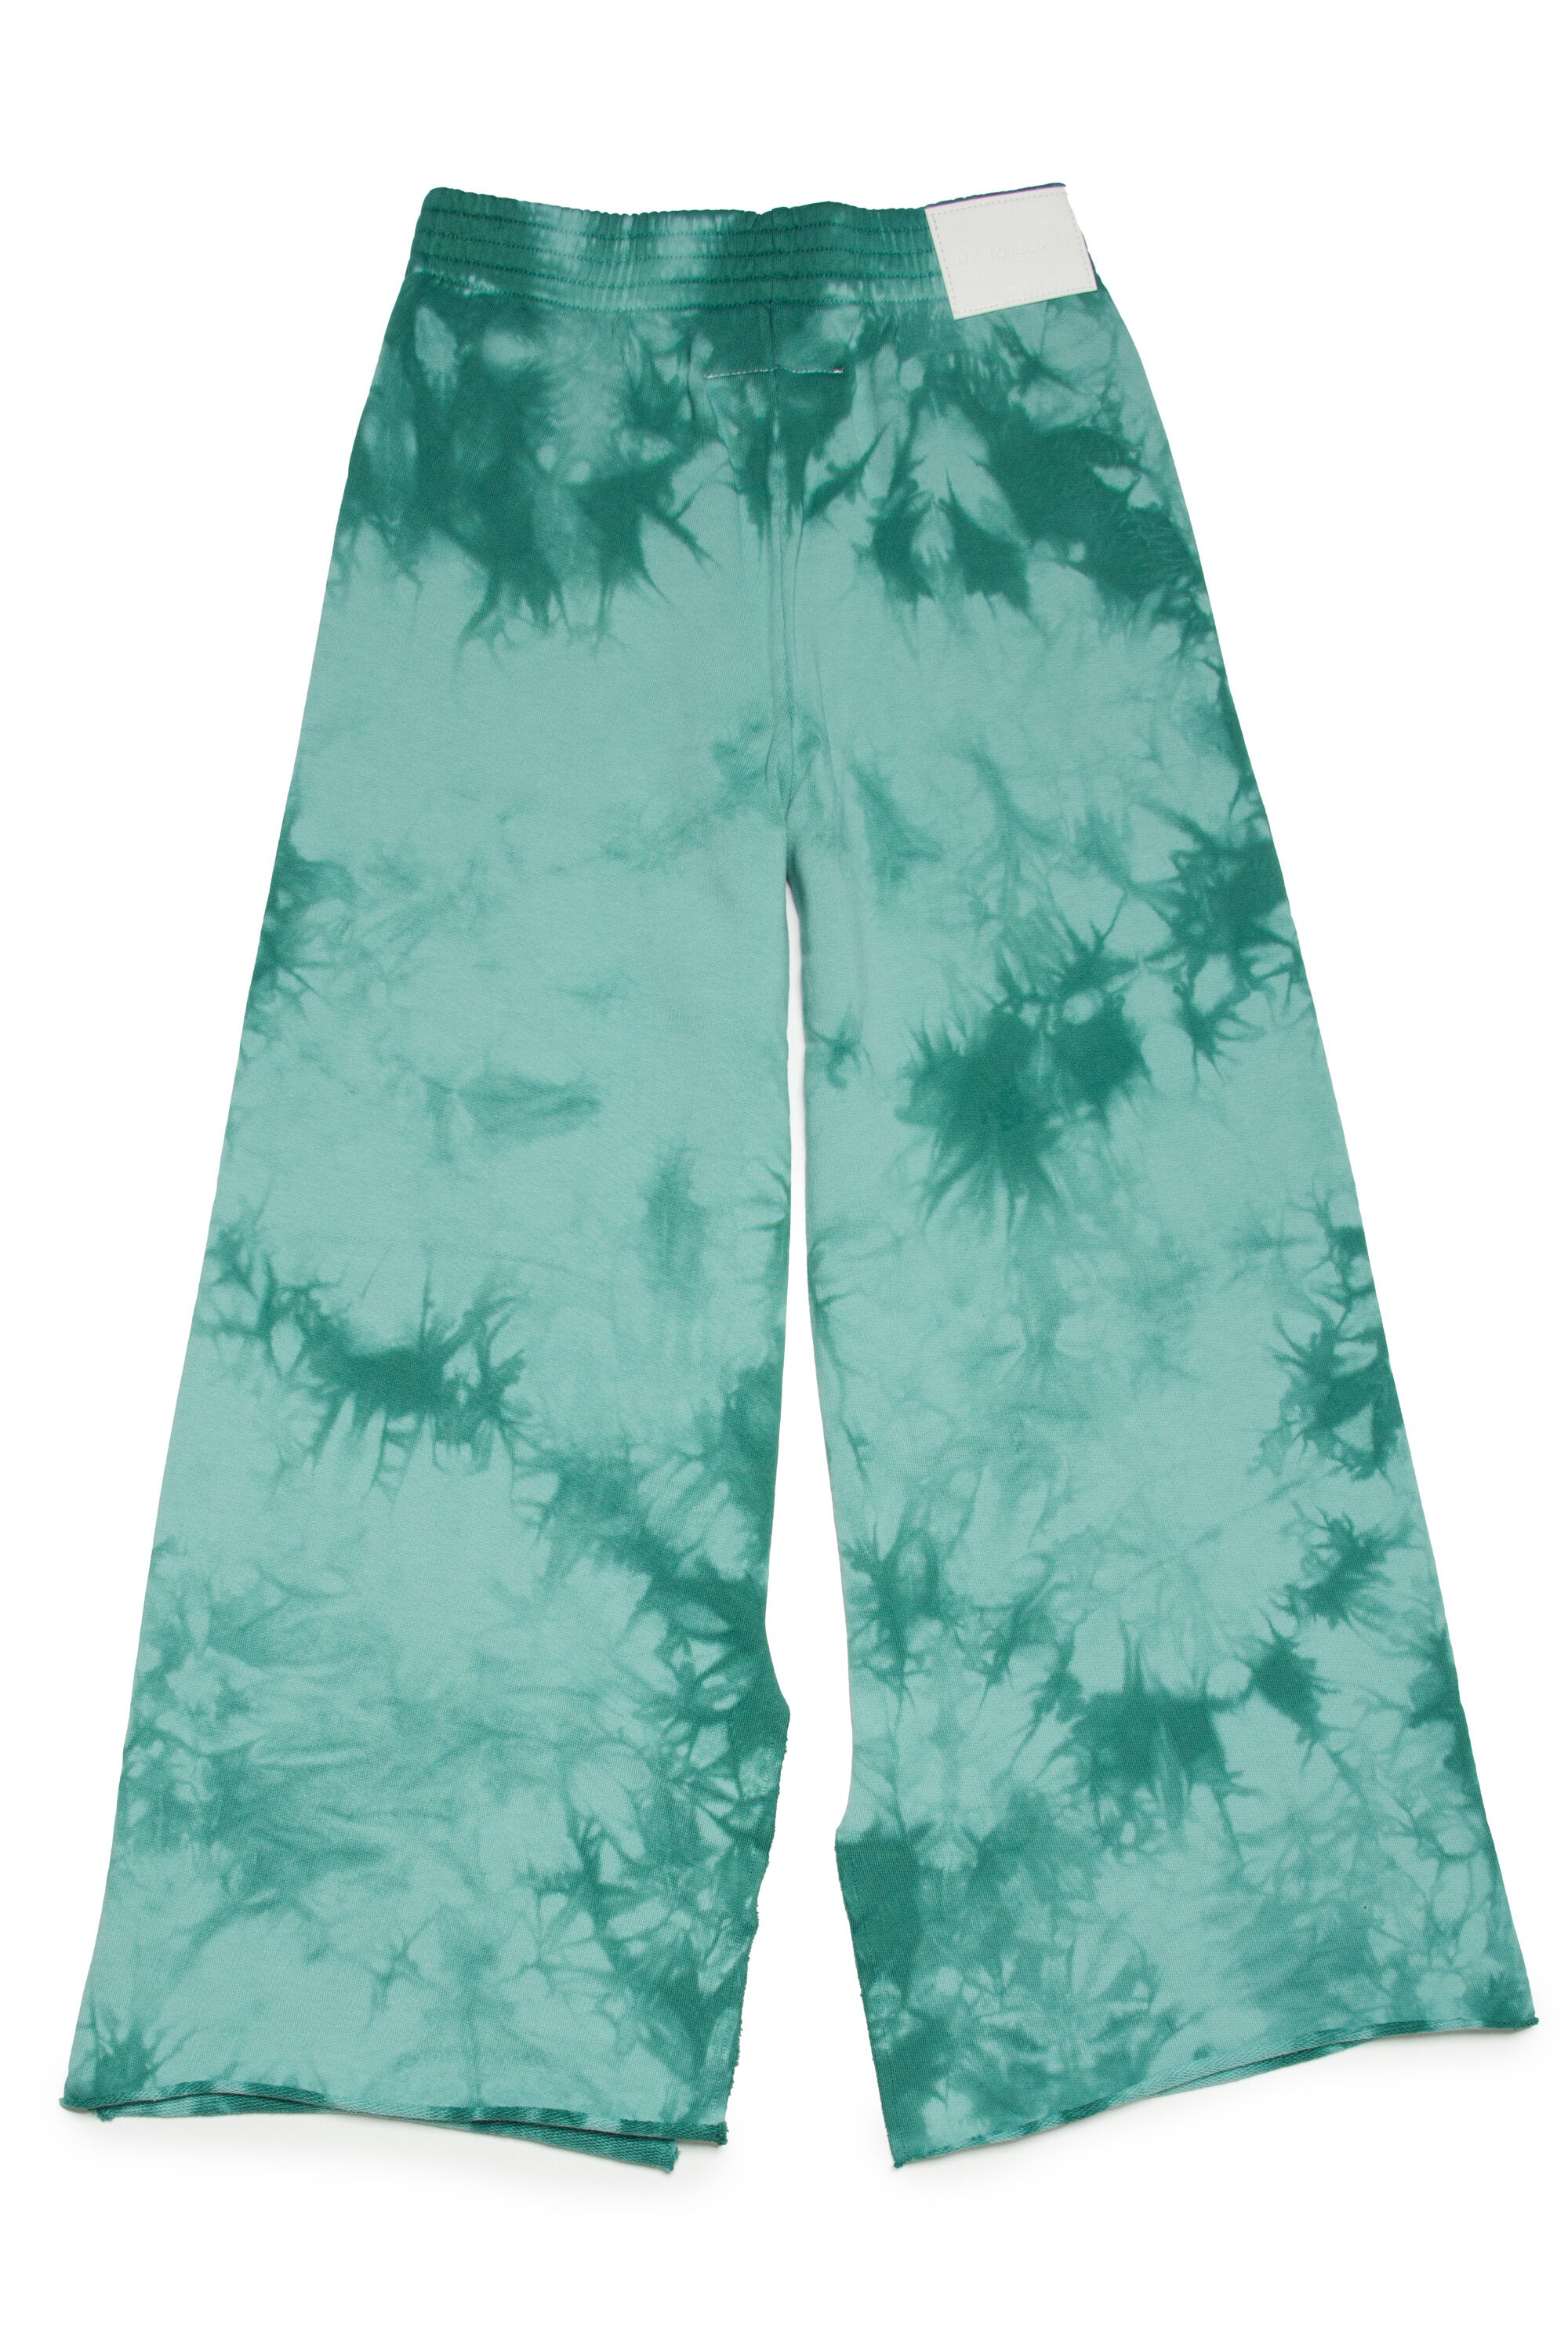 Green tie-dye effect cotton trousers